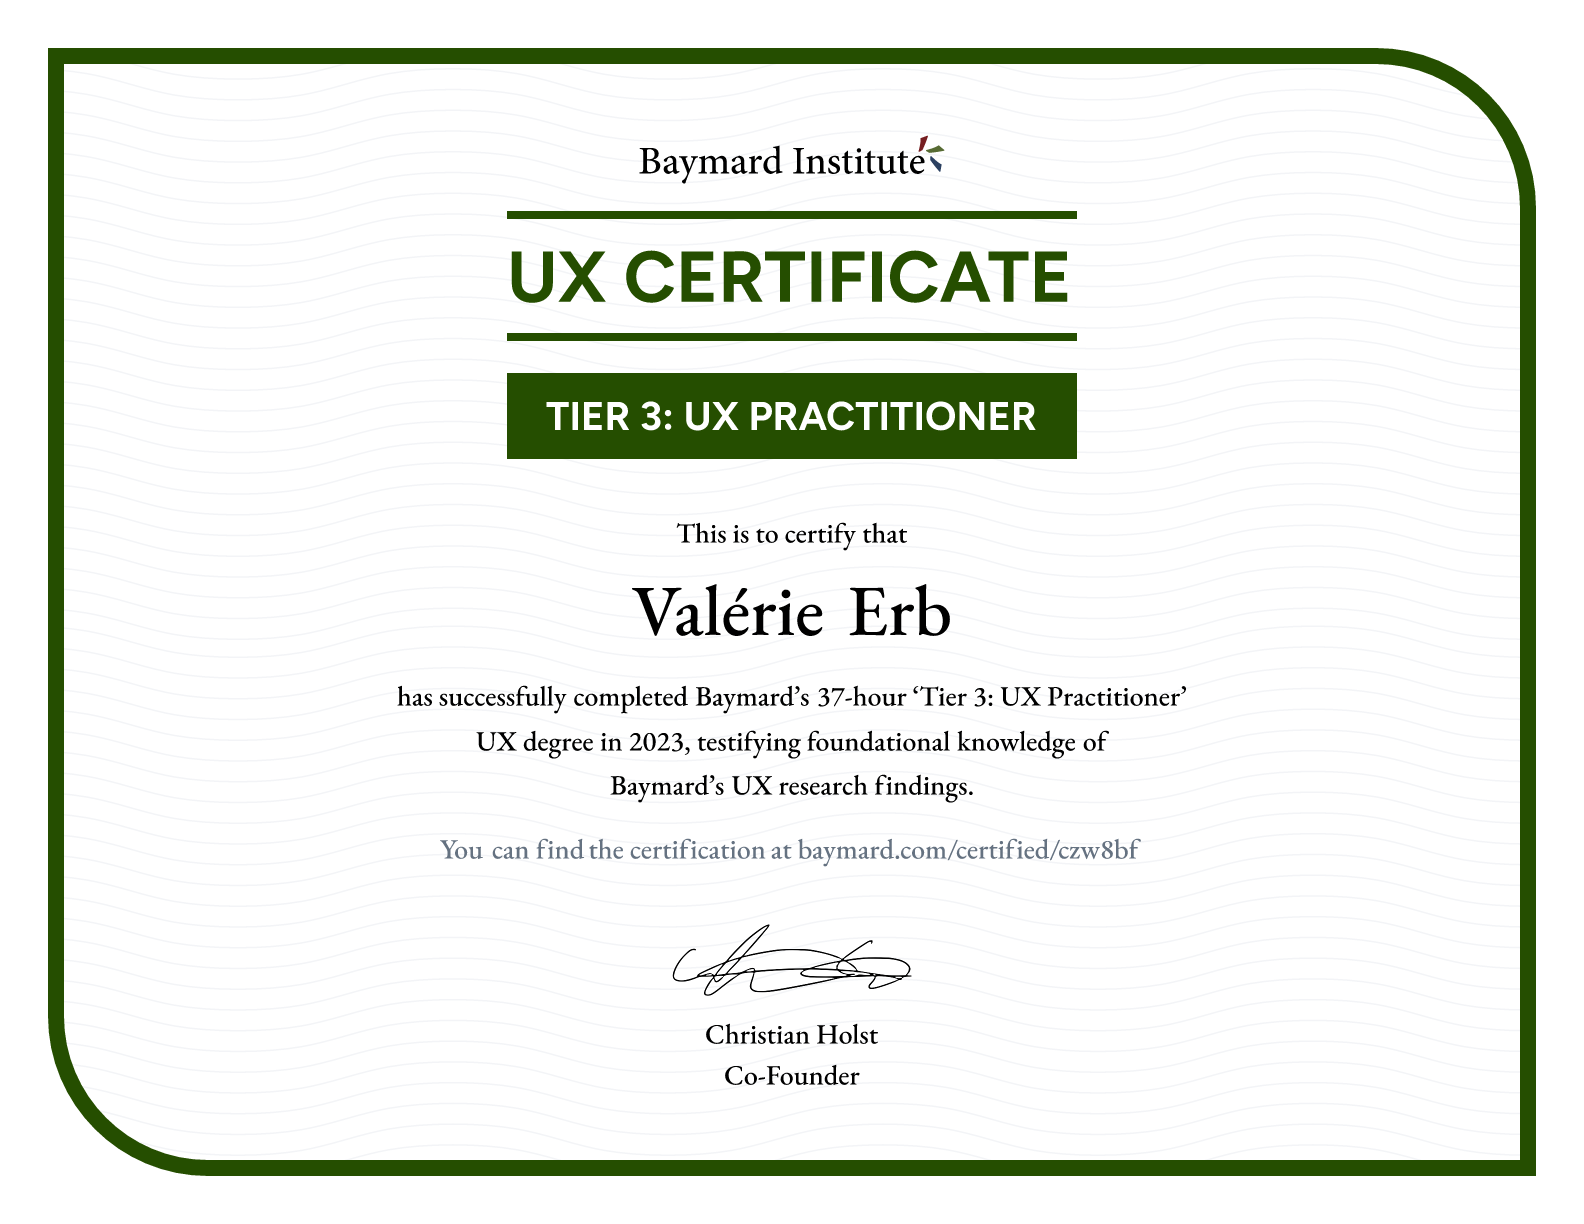 Valérie Erb’s certificate